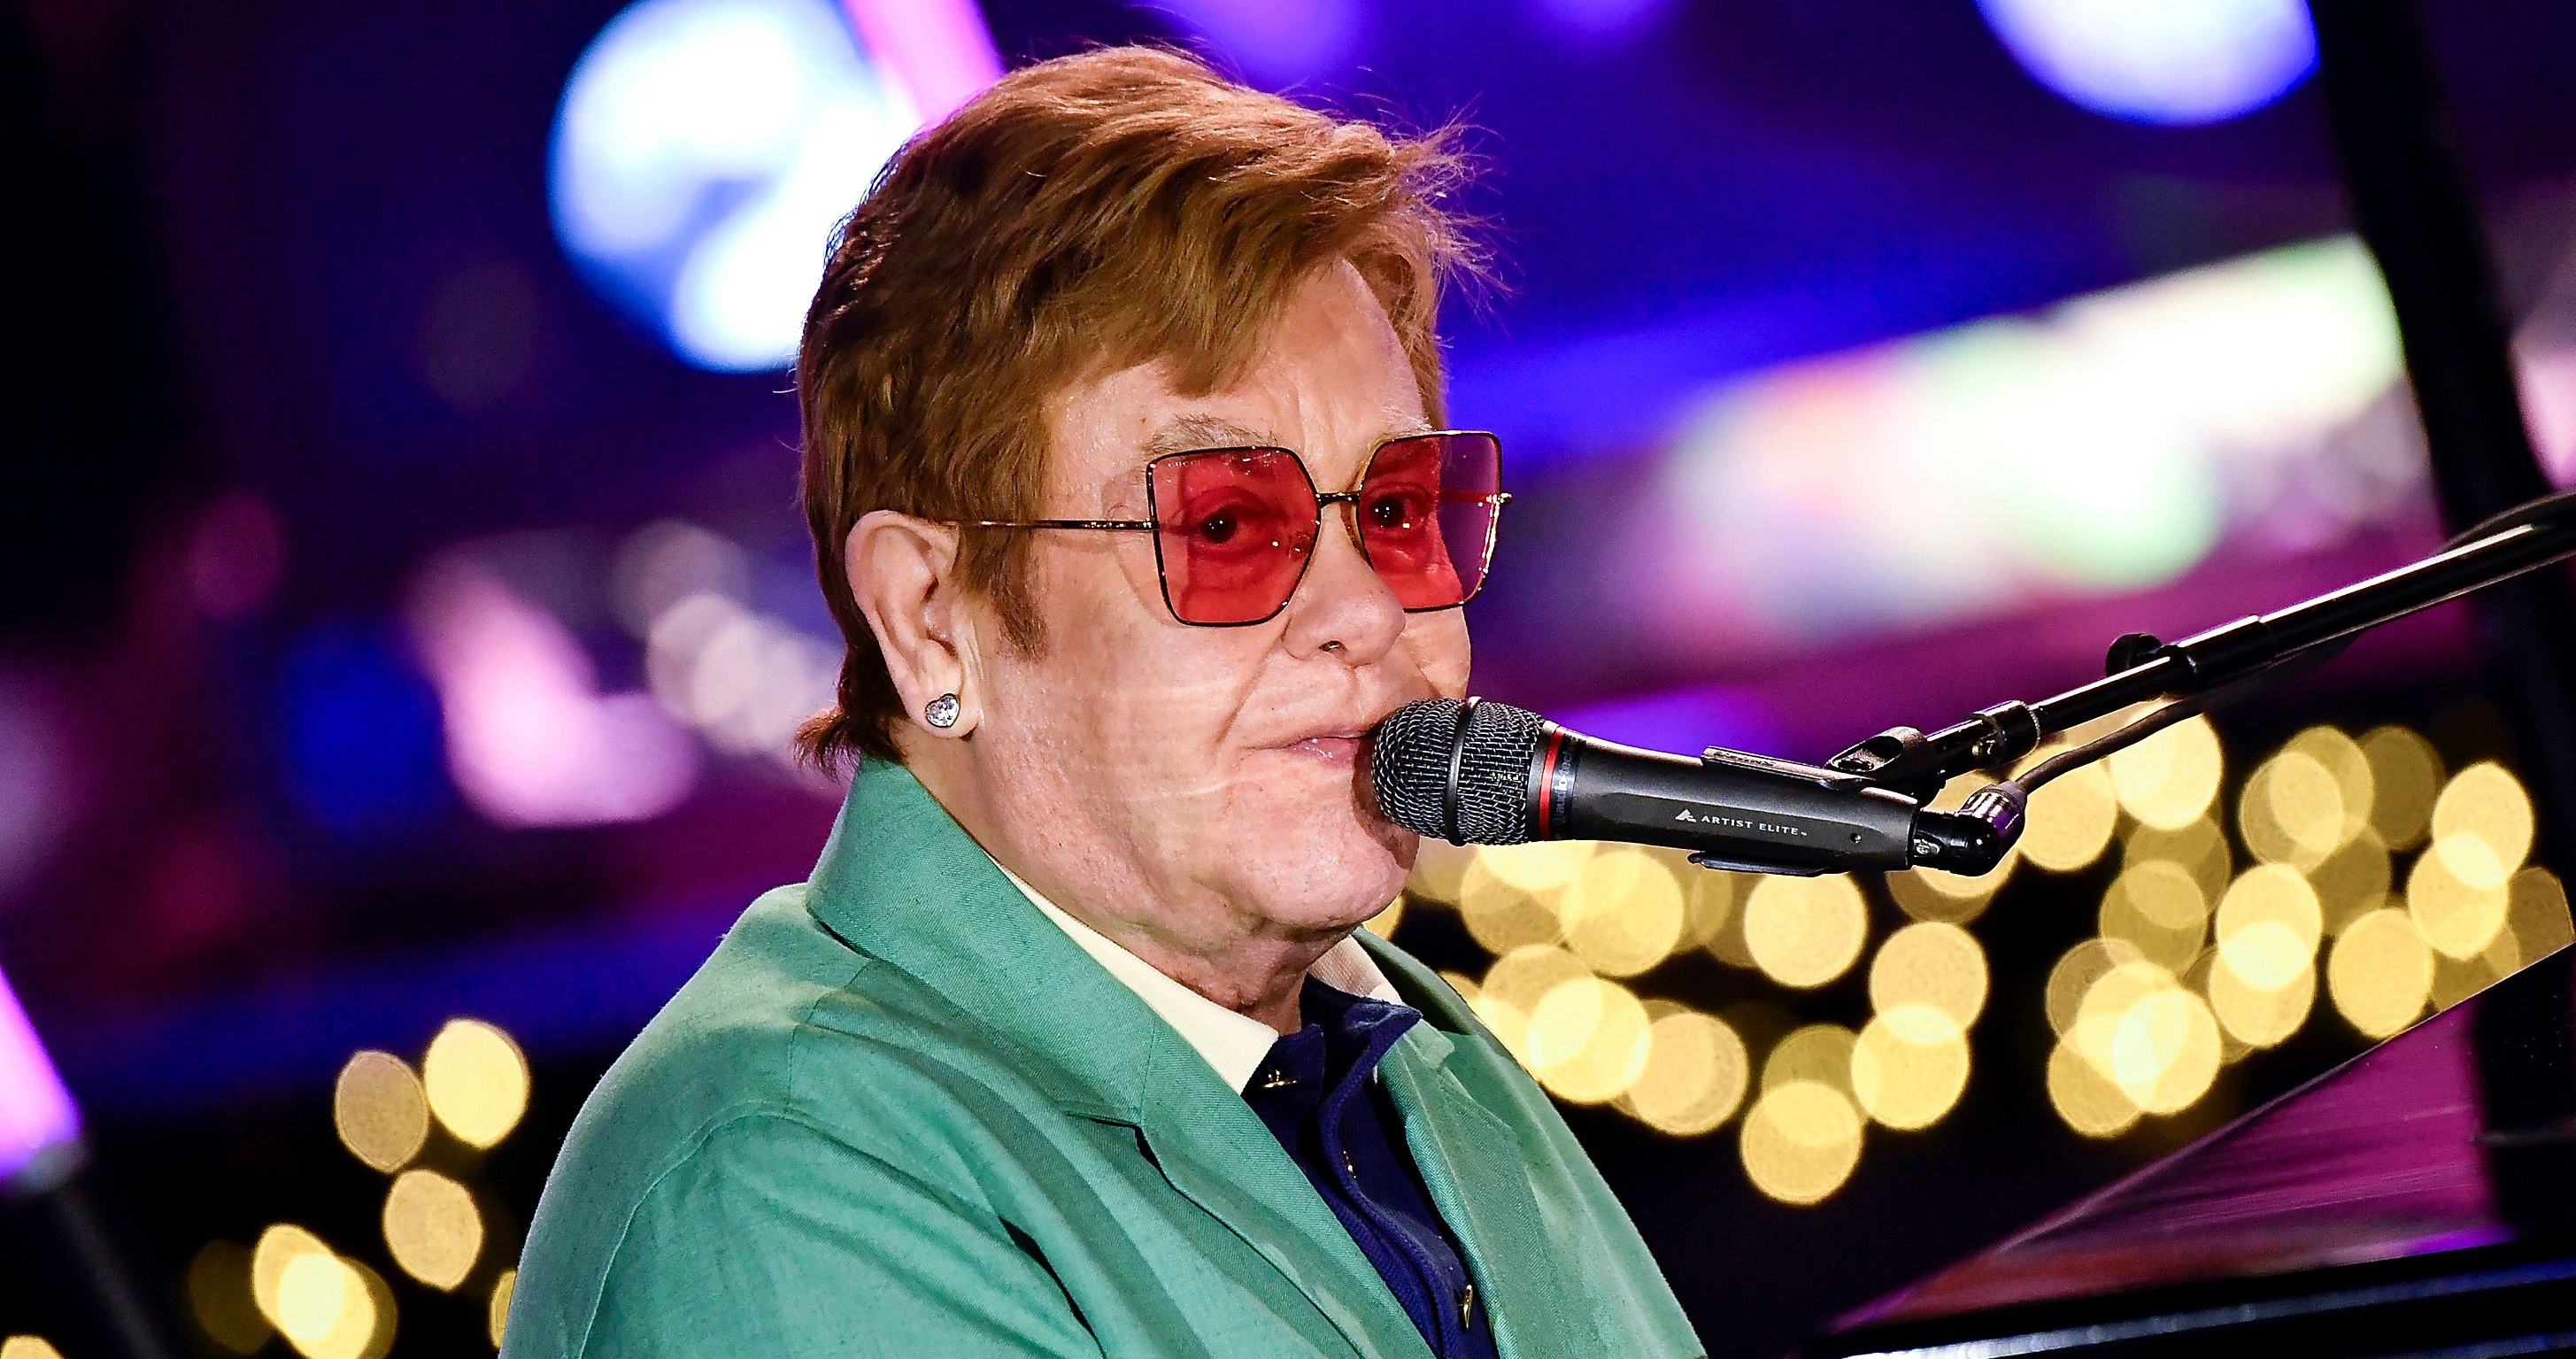 Elton John to headline Glastonbury in final UK show